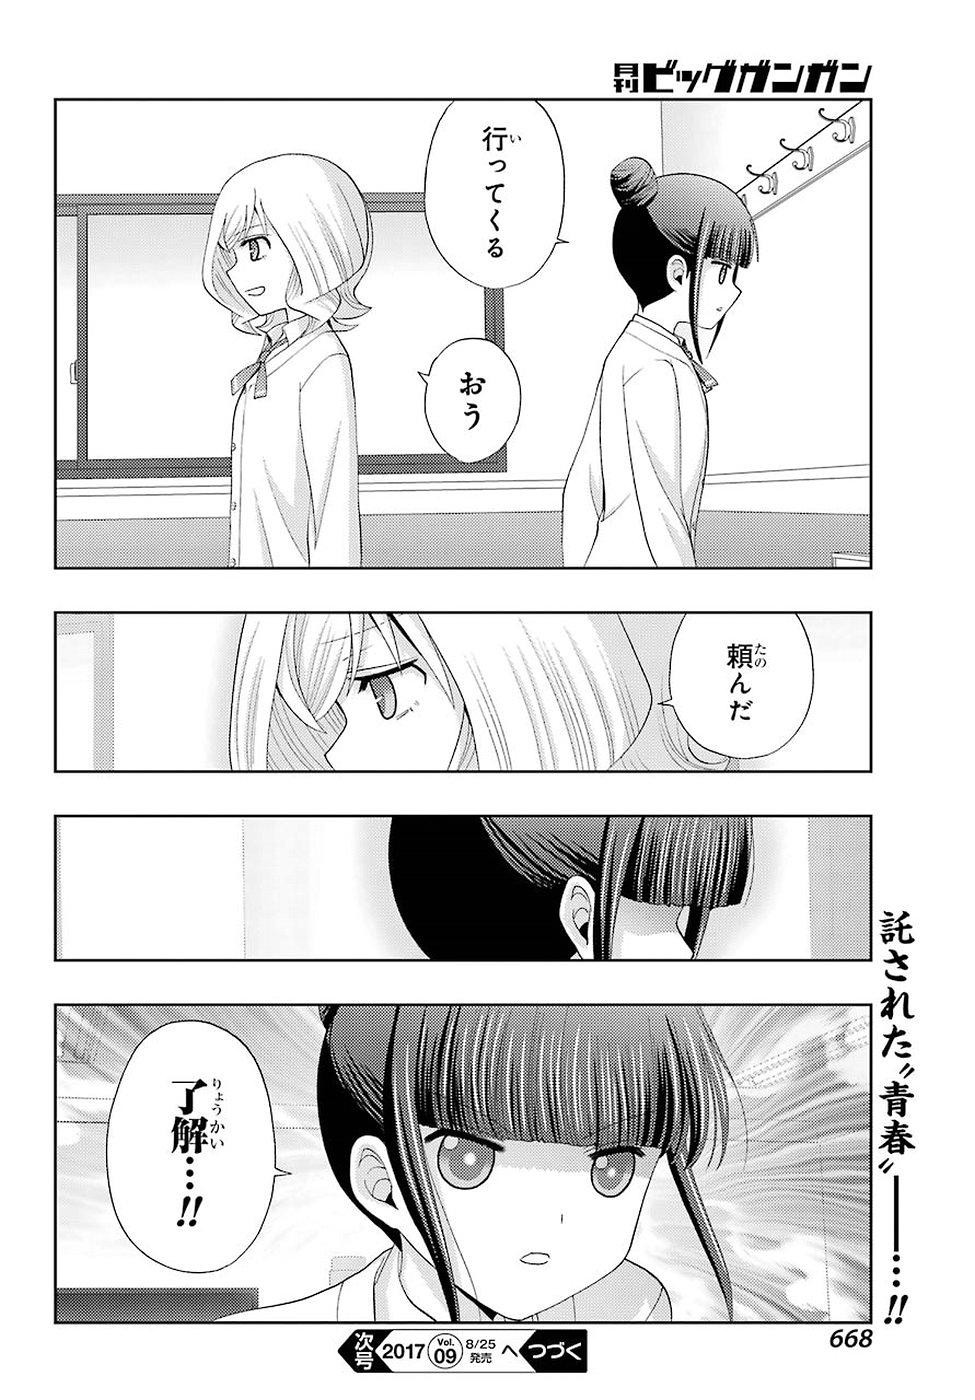 Shinohayu - The Dawn of Age Manga - Chapter 047 - Page 36